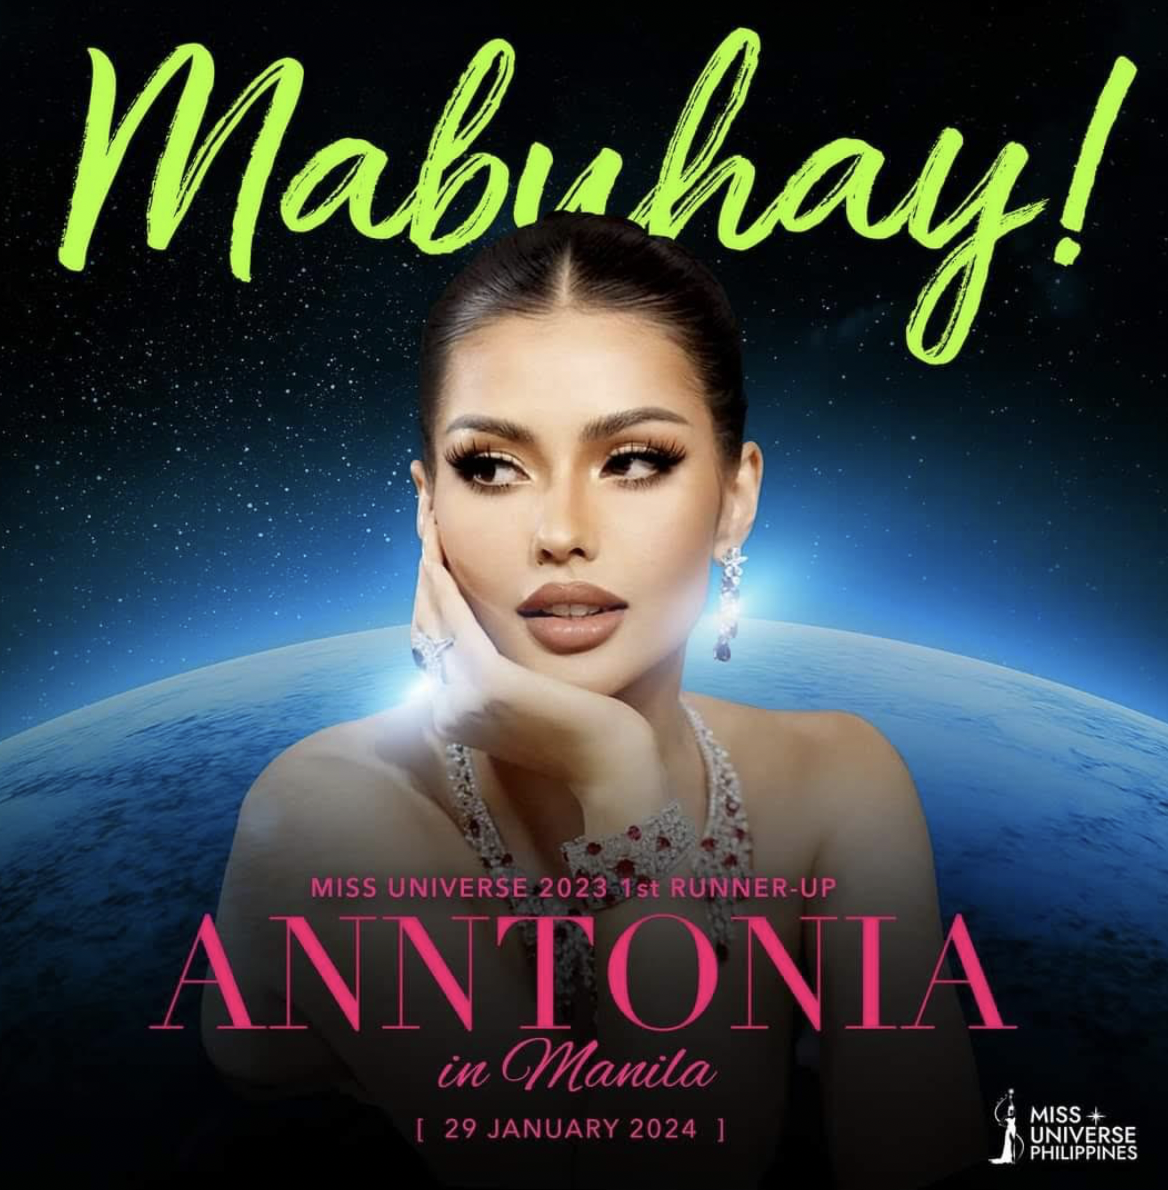 Miss Thailand Anntonia Porsild is coming to Manila